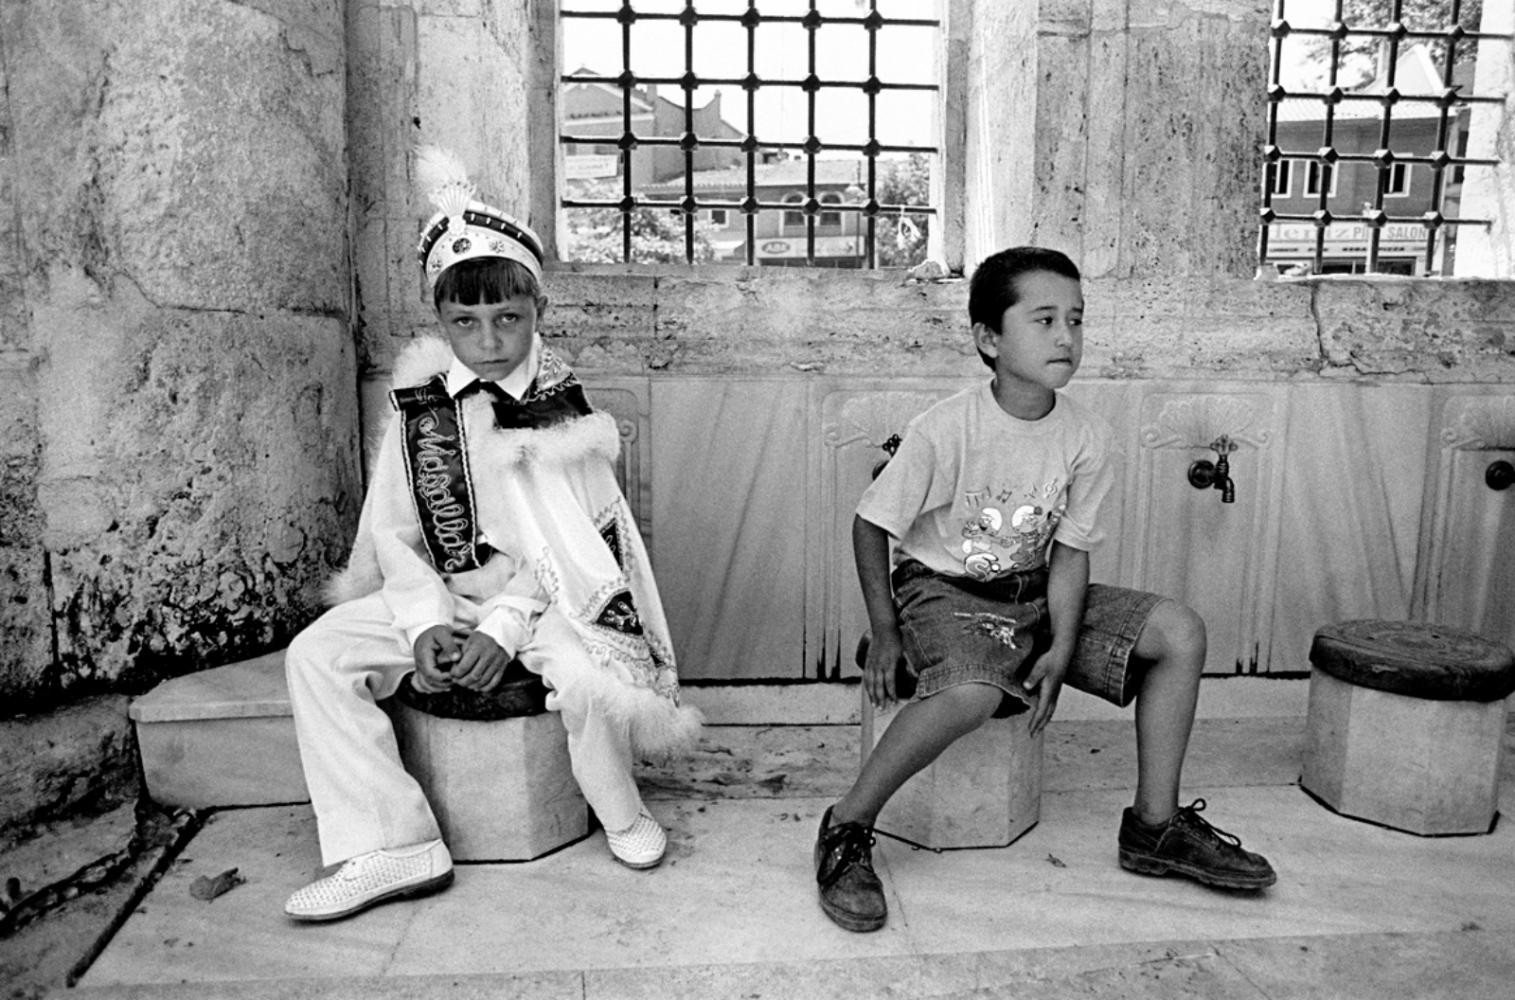 Turkey -  The King and the Boy, Turkey, Summer 1997 